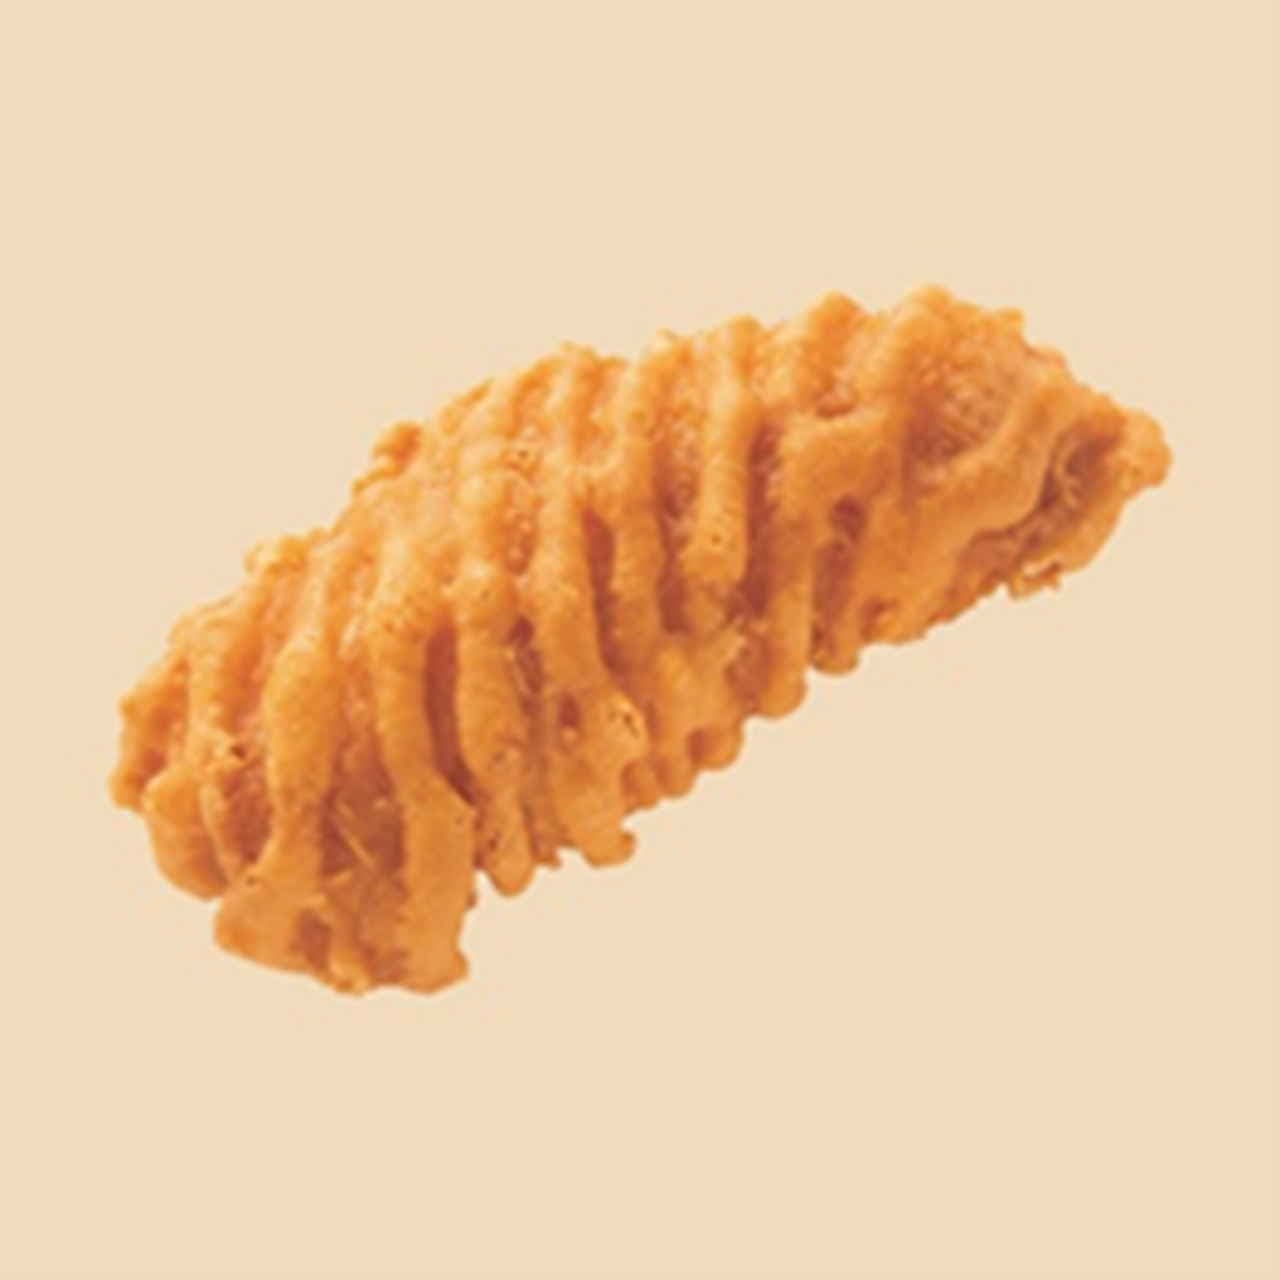 Famima Crispy Chicken (plain)